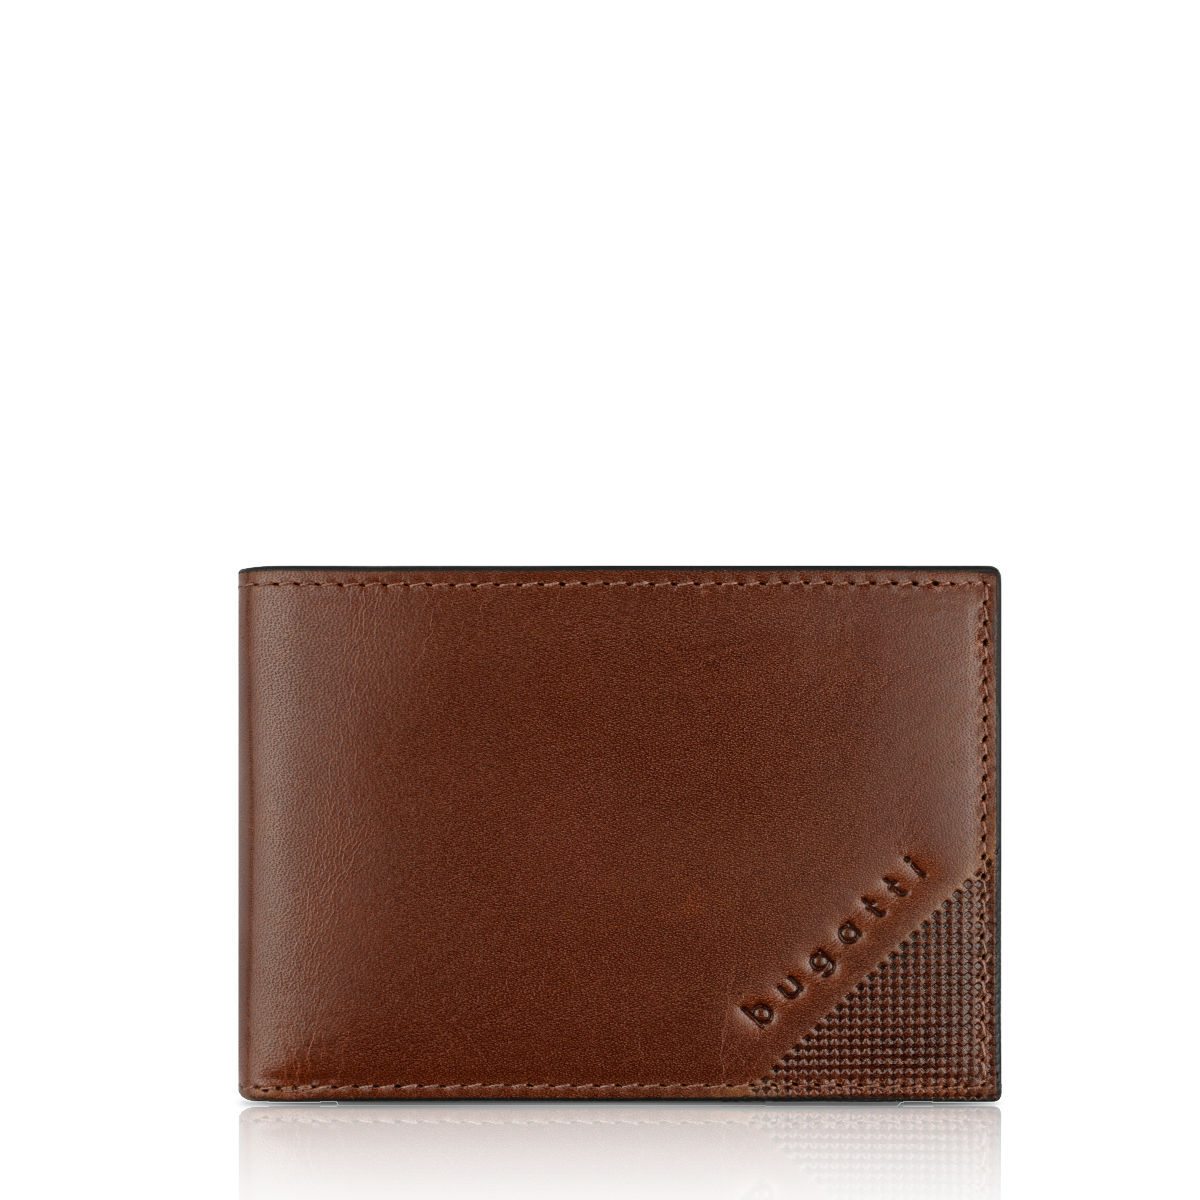 Bugatti men\'s leather wallet - cognac brown